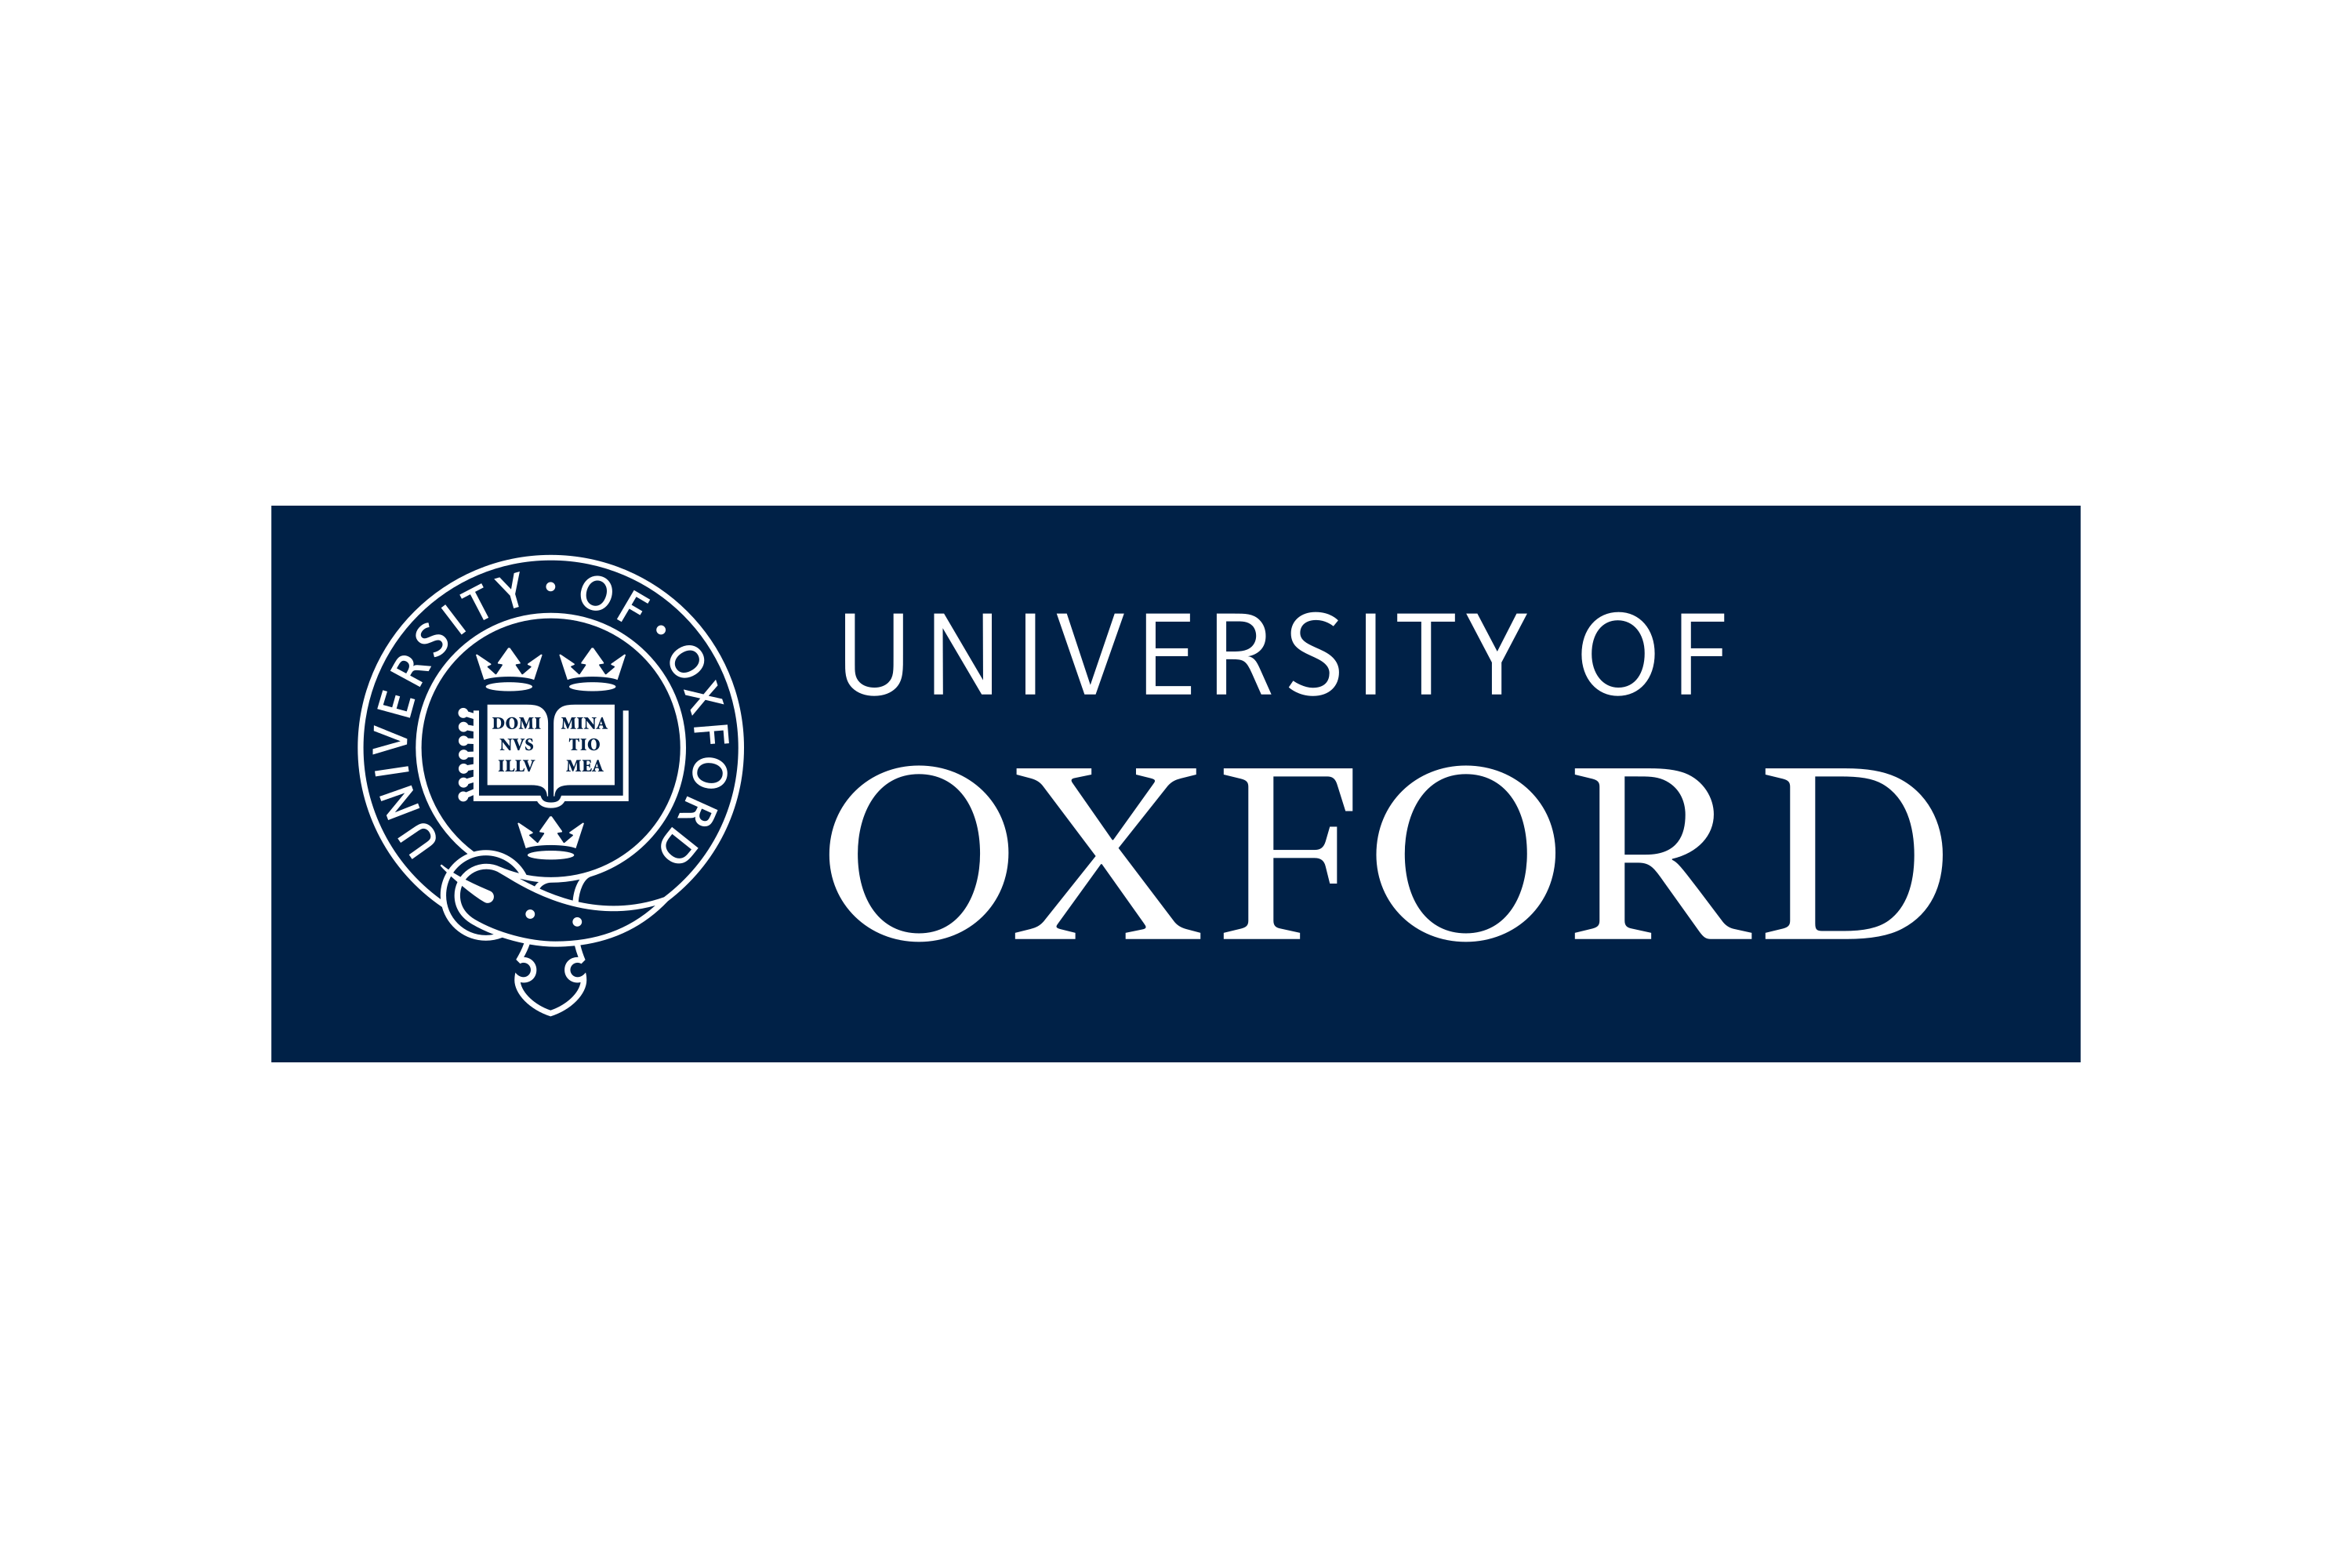 OXFORD University Dictionary